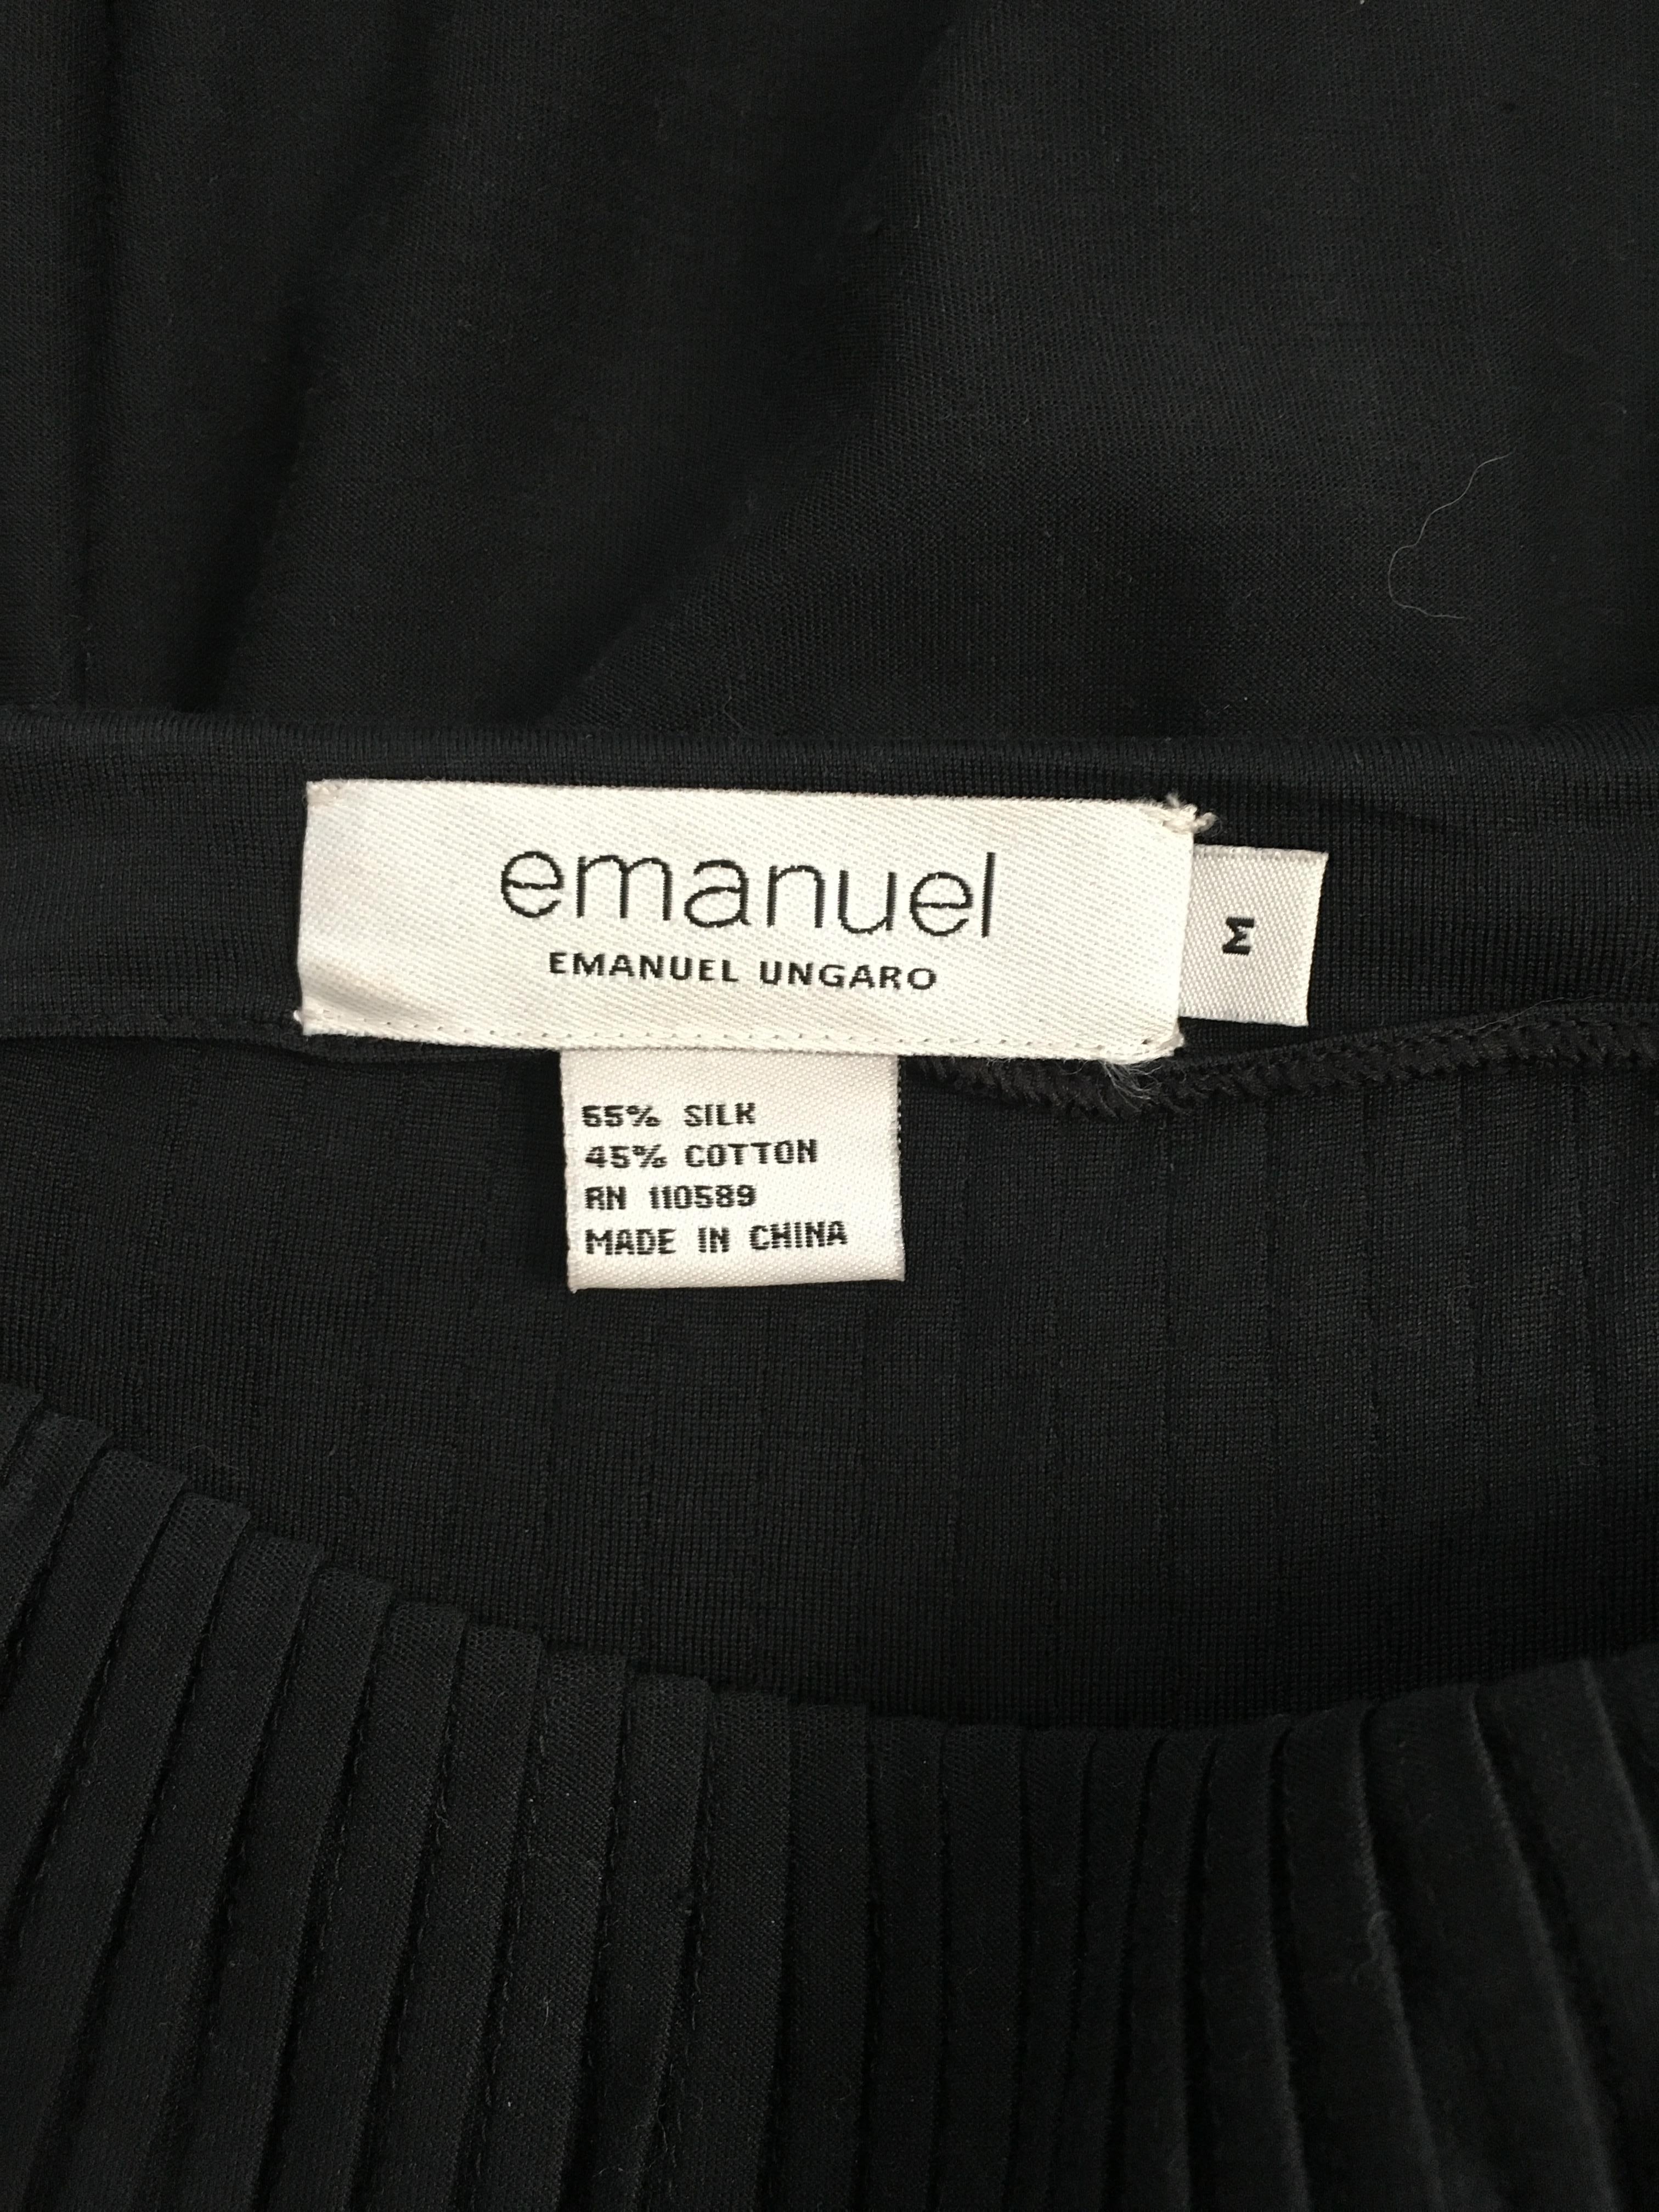 Emanuel Ungaro 1990s Silk & Cotton Pleated Black Skirt Size 10. For Sale 14